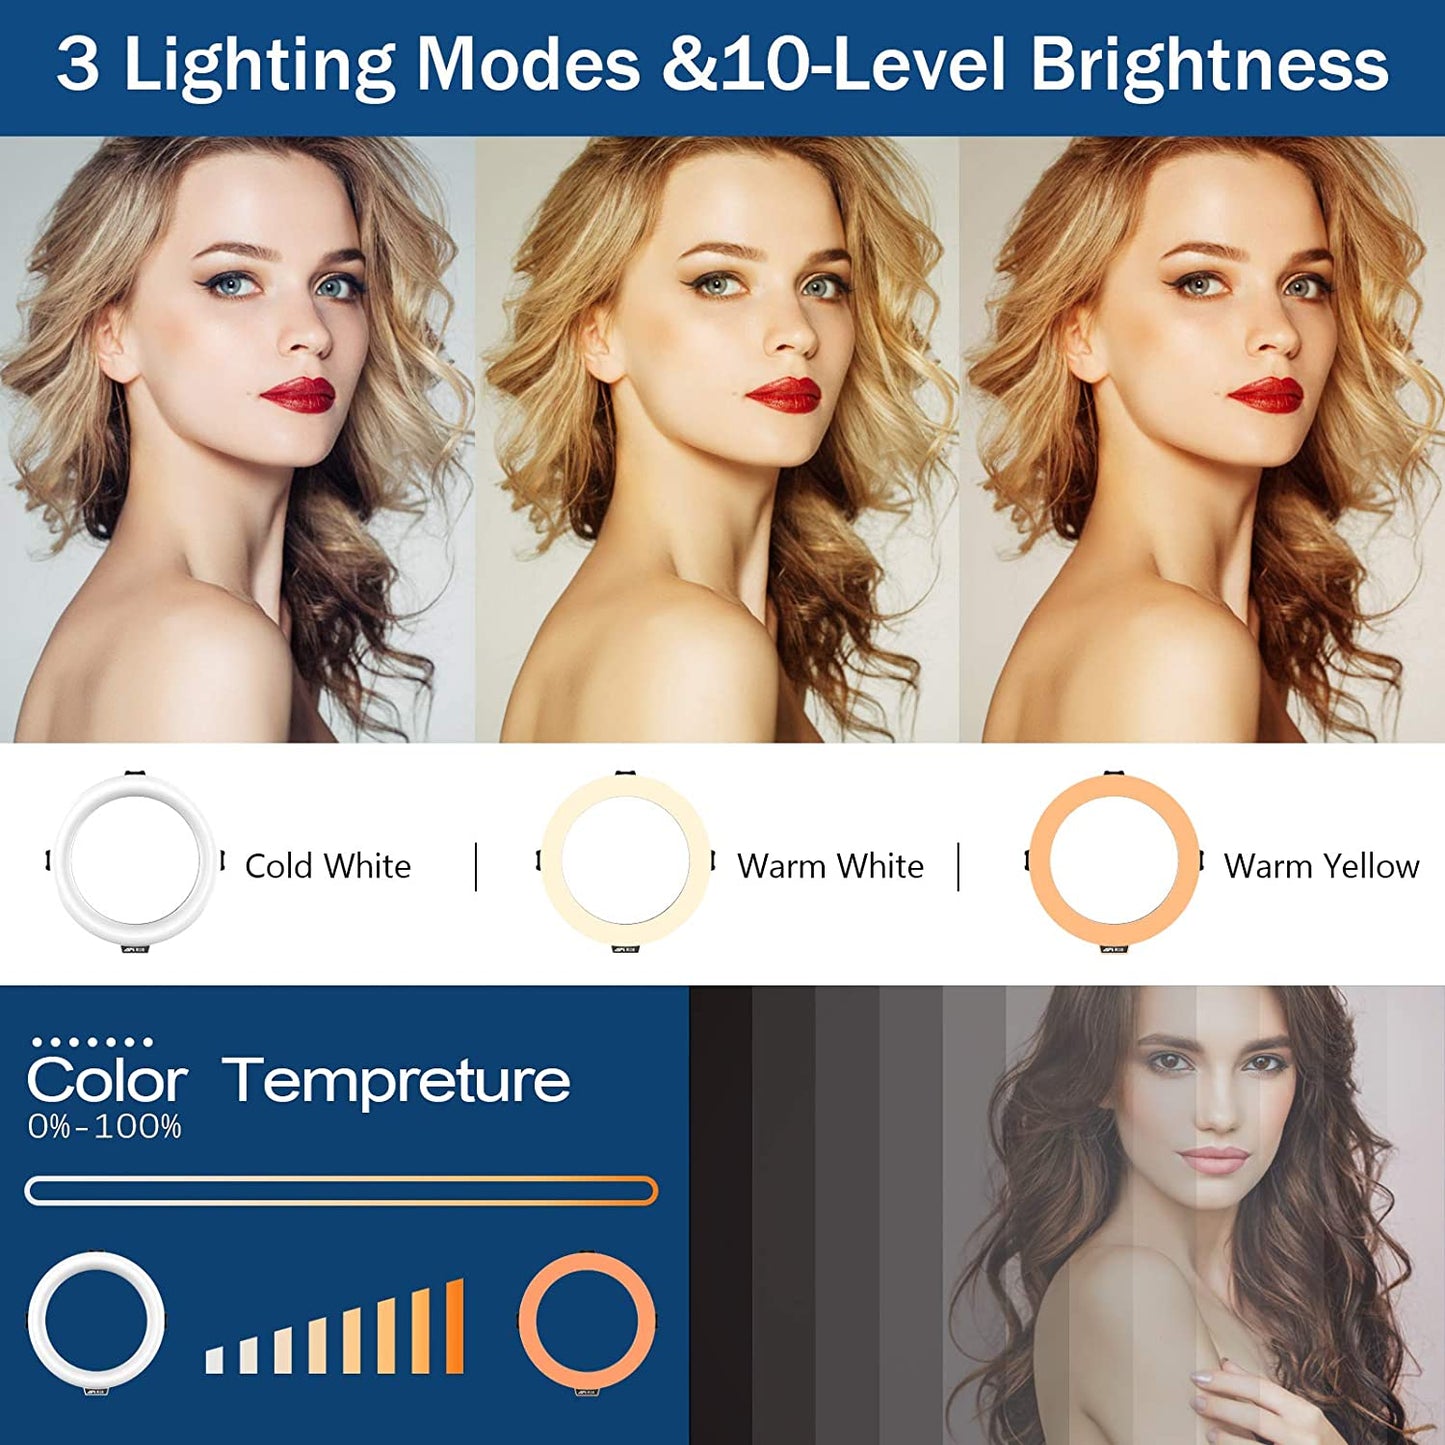 3 lighting modes & 10-level brightness